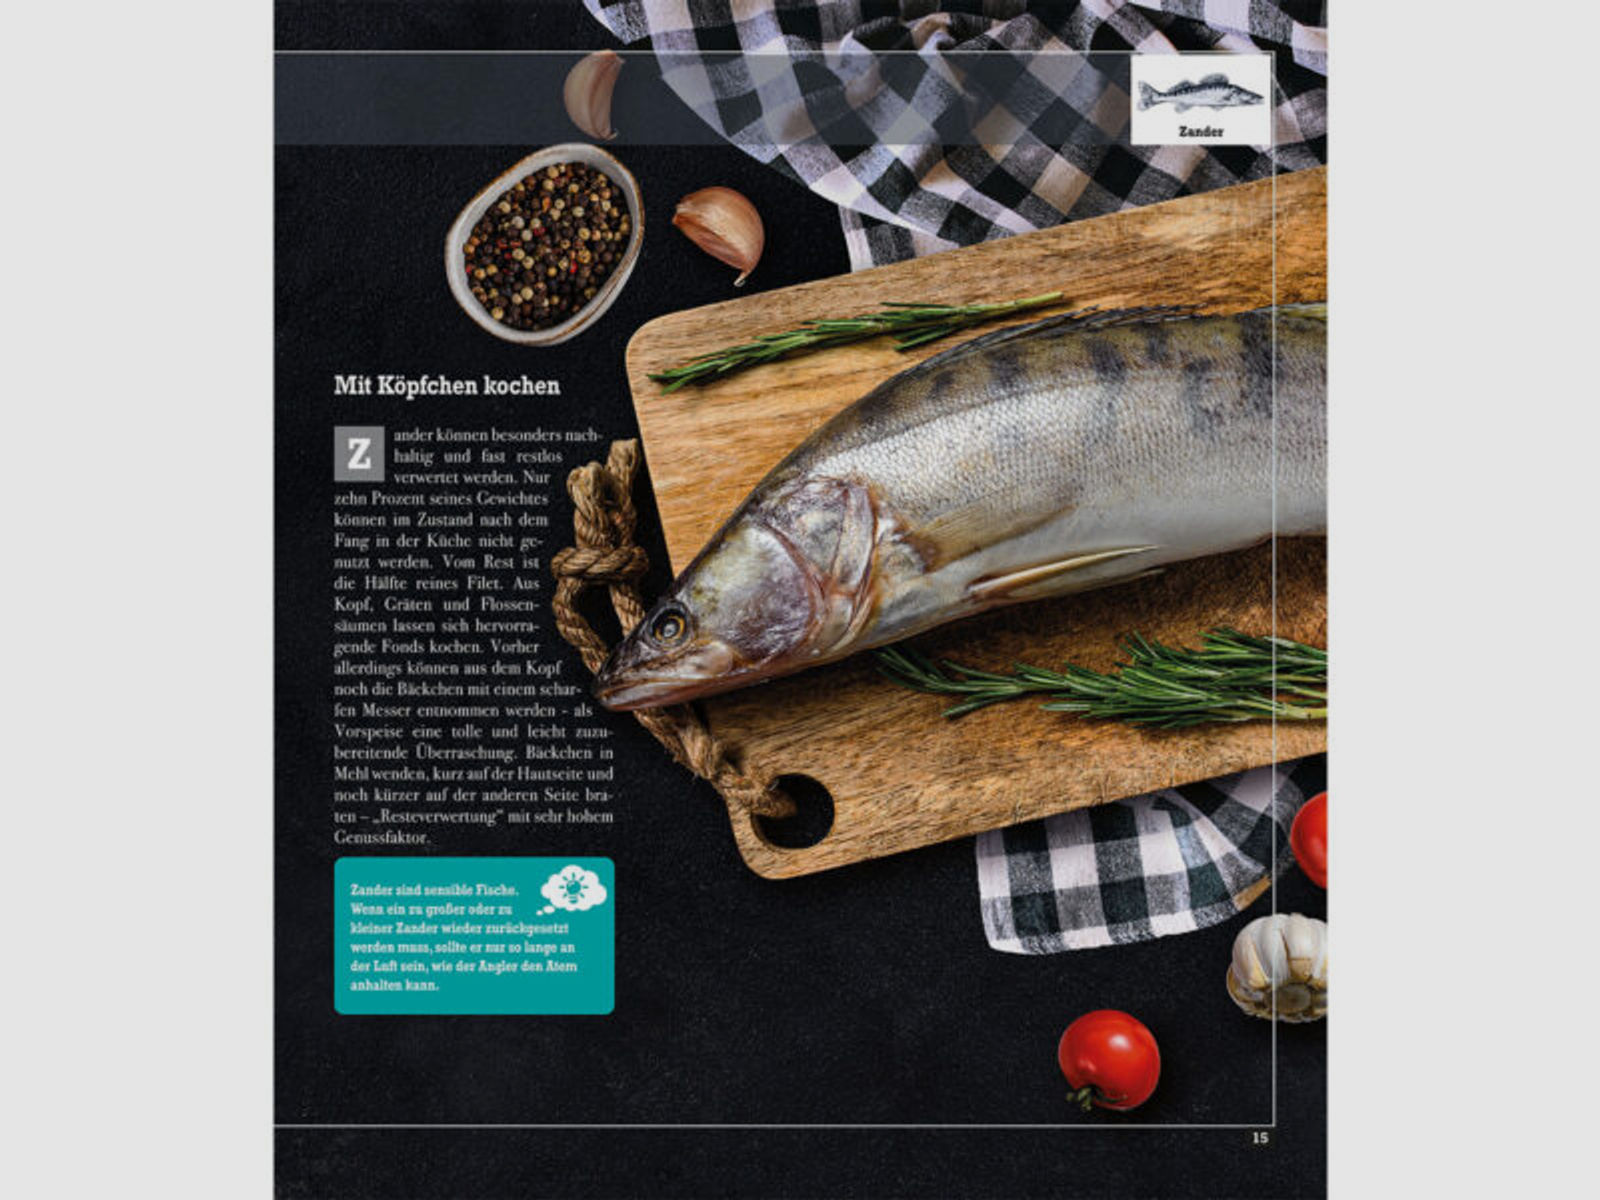 Liebetanz/Dänekas, Hook & Cook: angeln, kochen & genießen